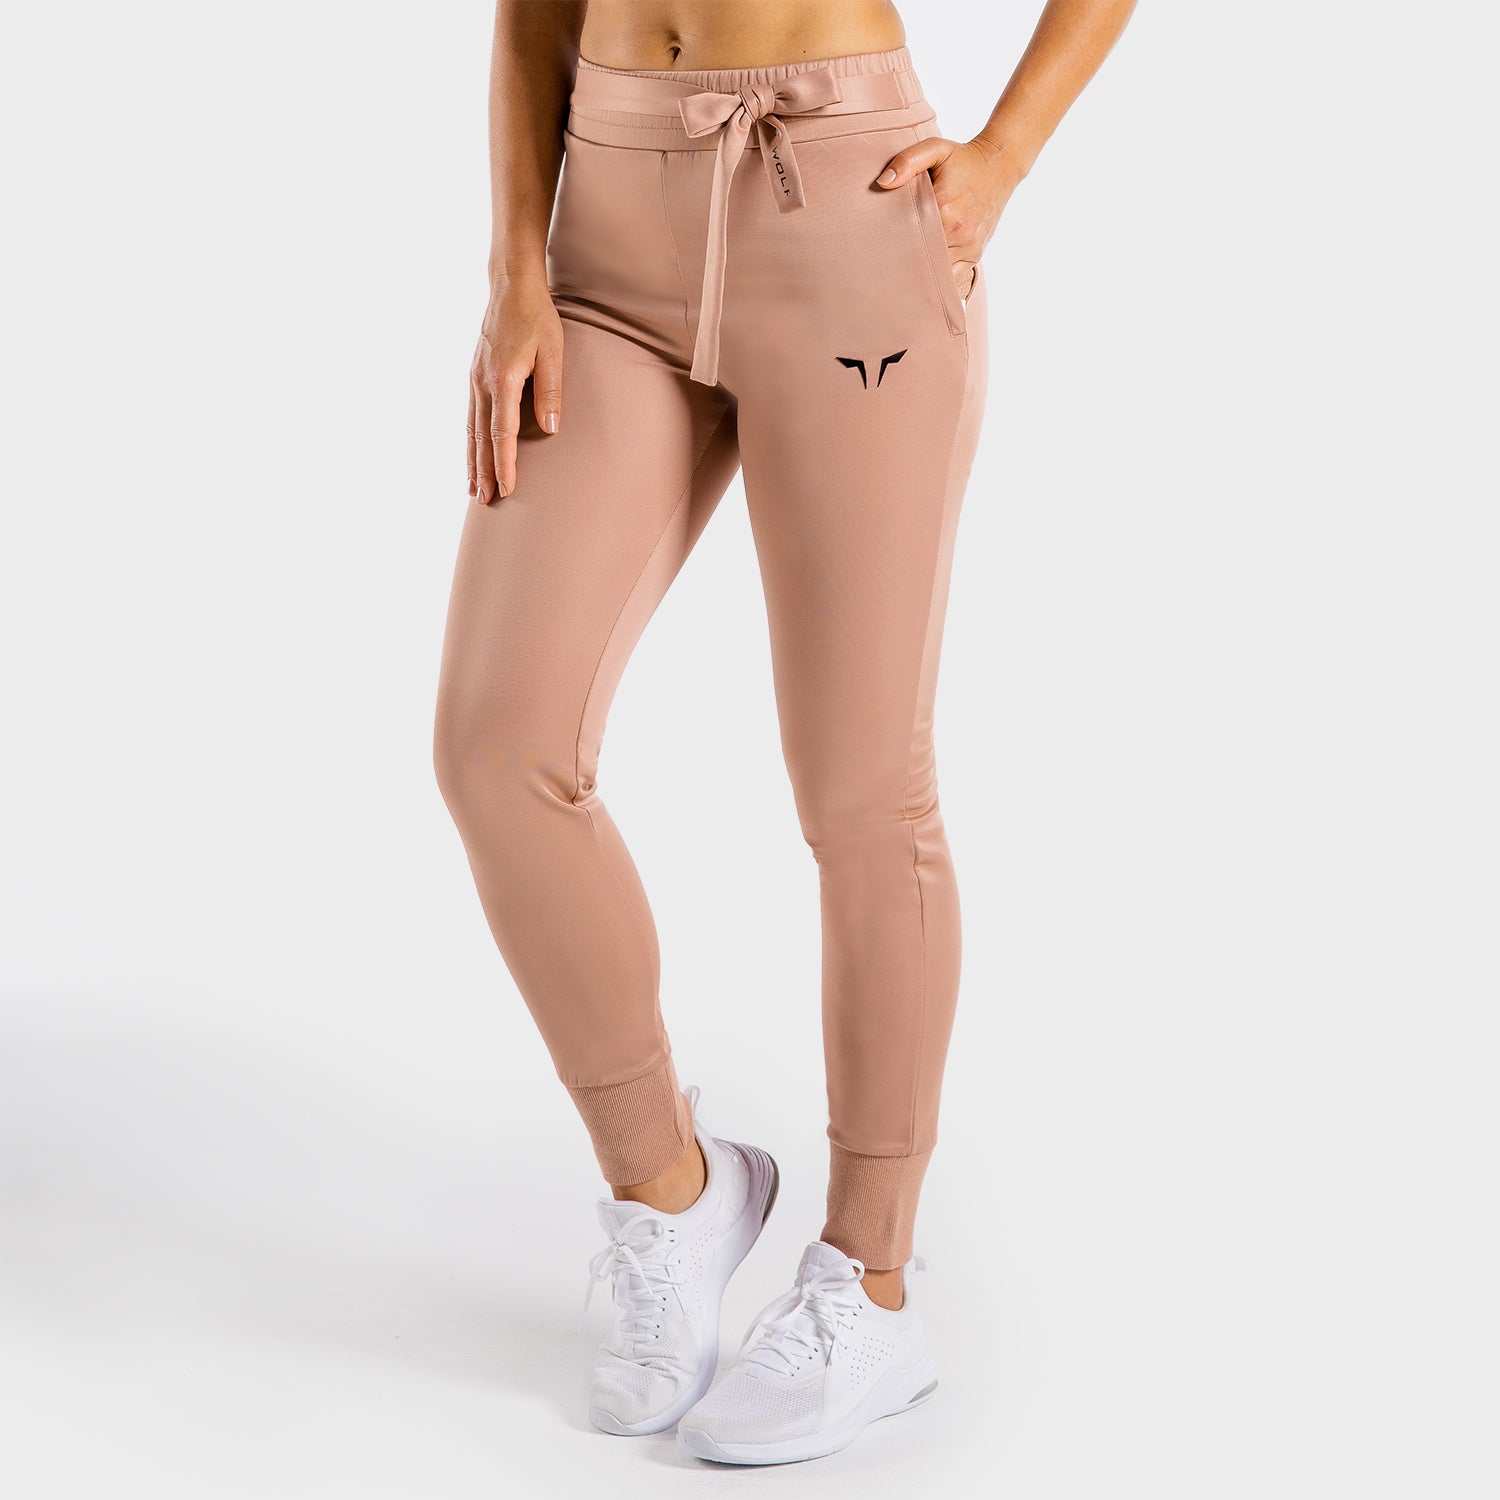 DZ, Core Oversize Joggers - Black, Workout Pants Women